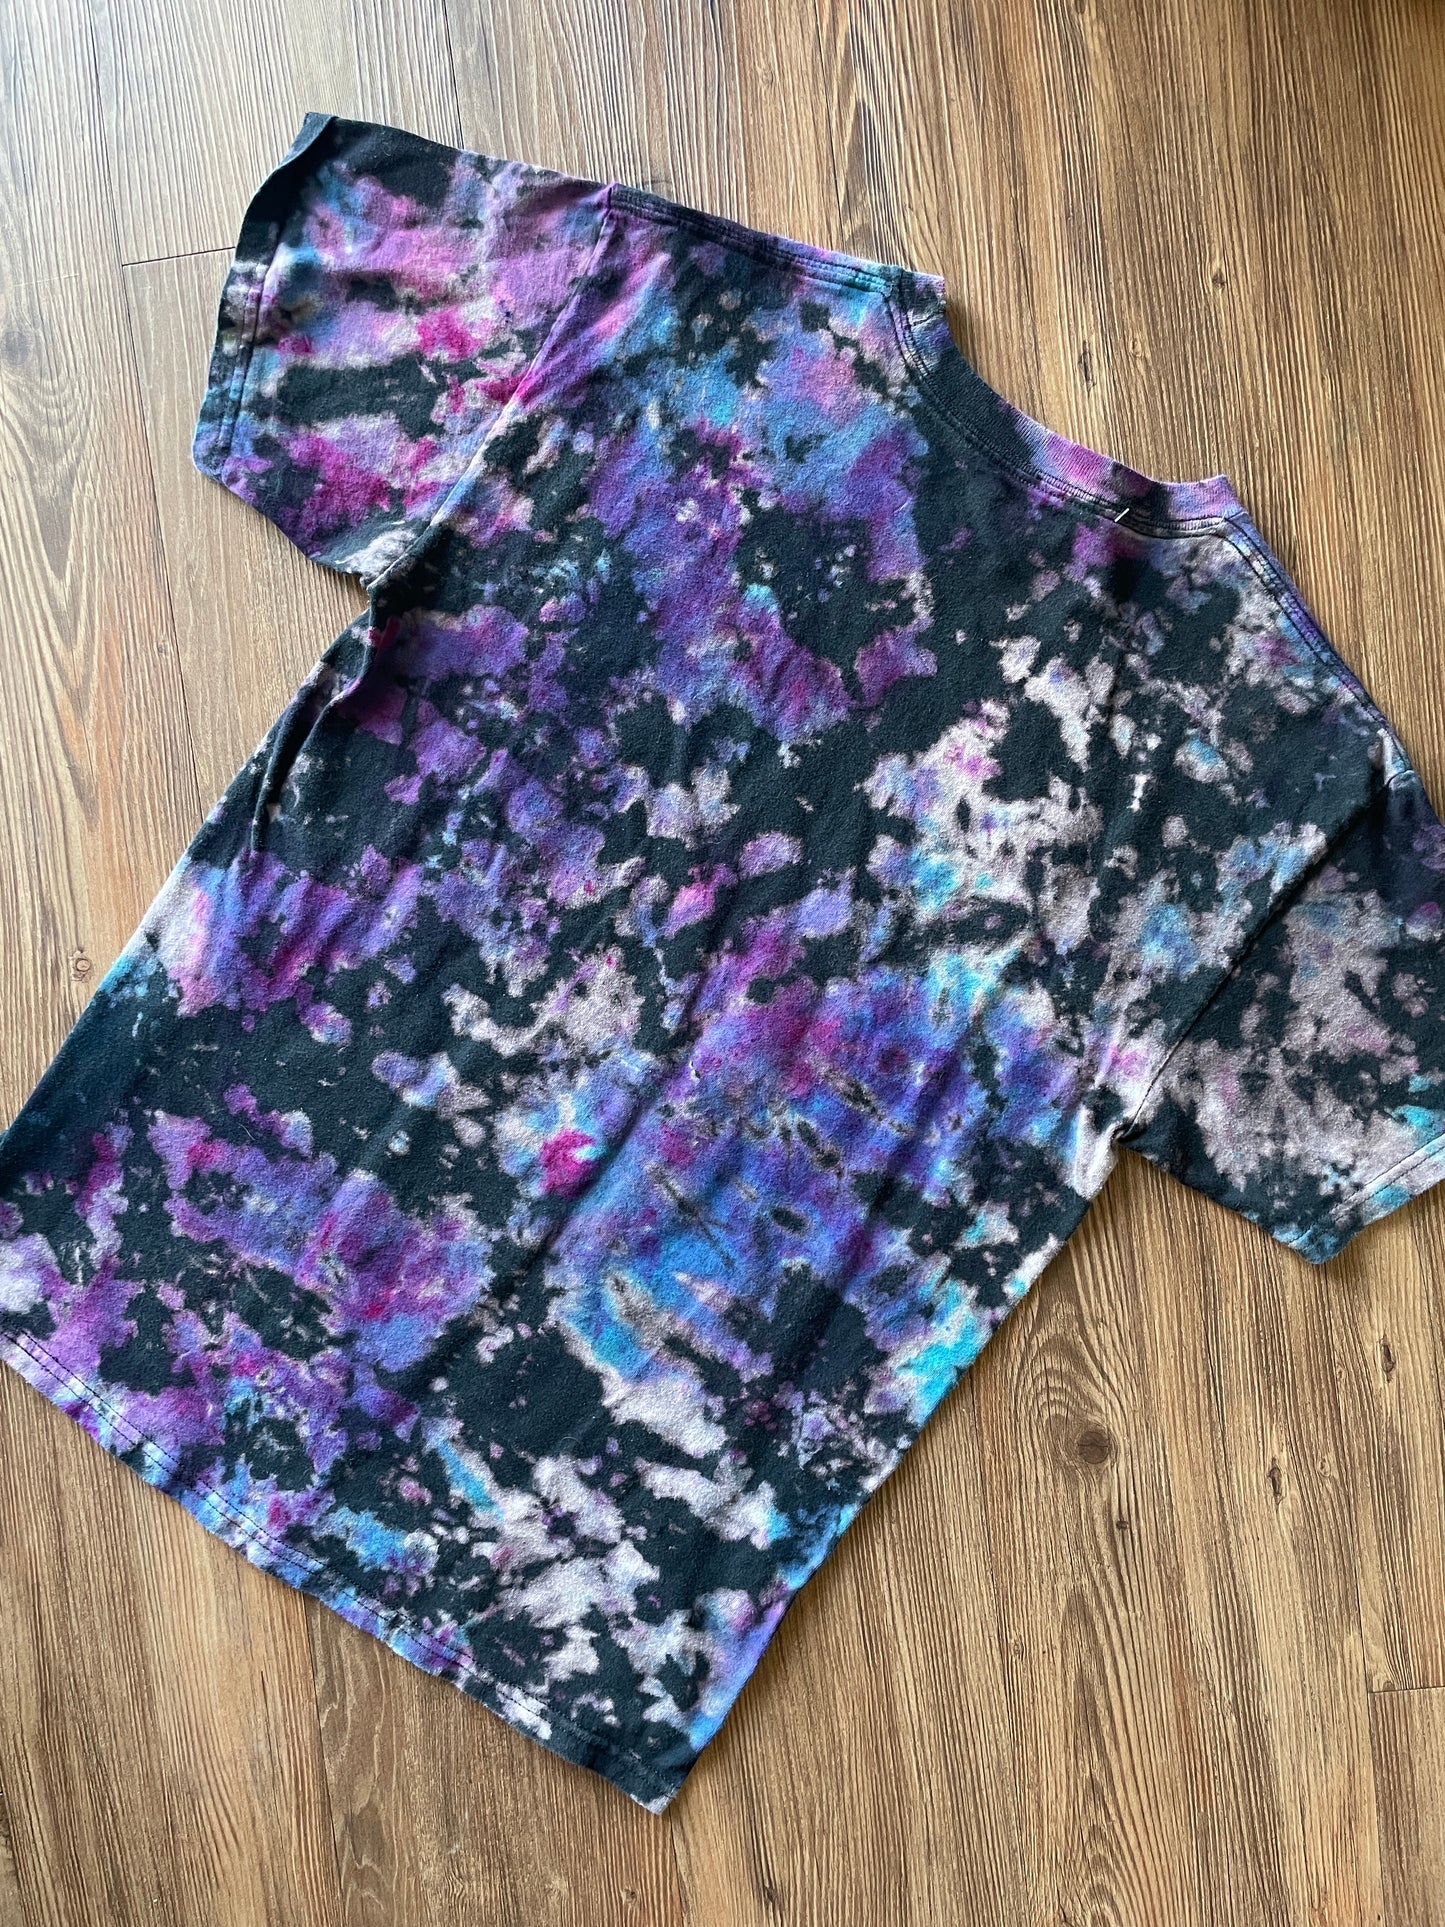 Medium Men’s Pass The Love Handmade Reverse Tie Dye T-Shirt | Black and Purple Crumpled Tie Dye Short Sleeve